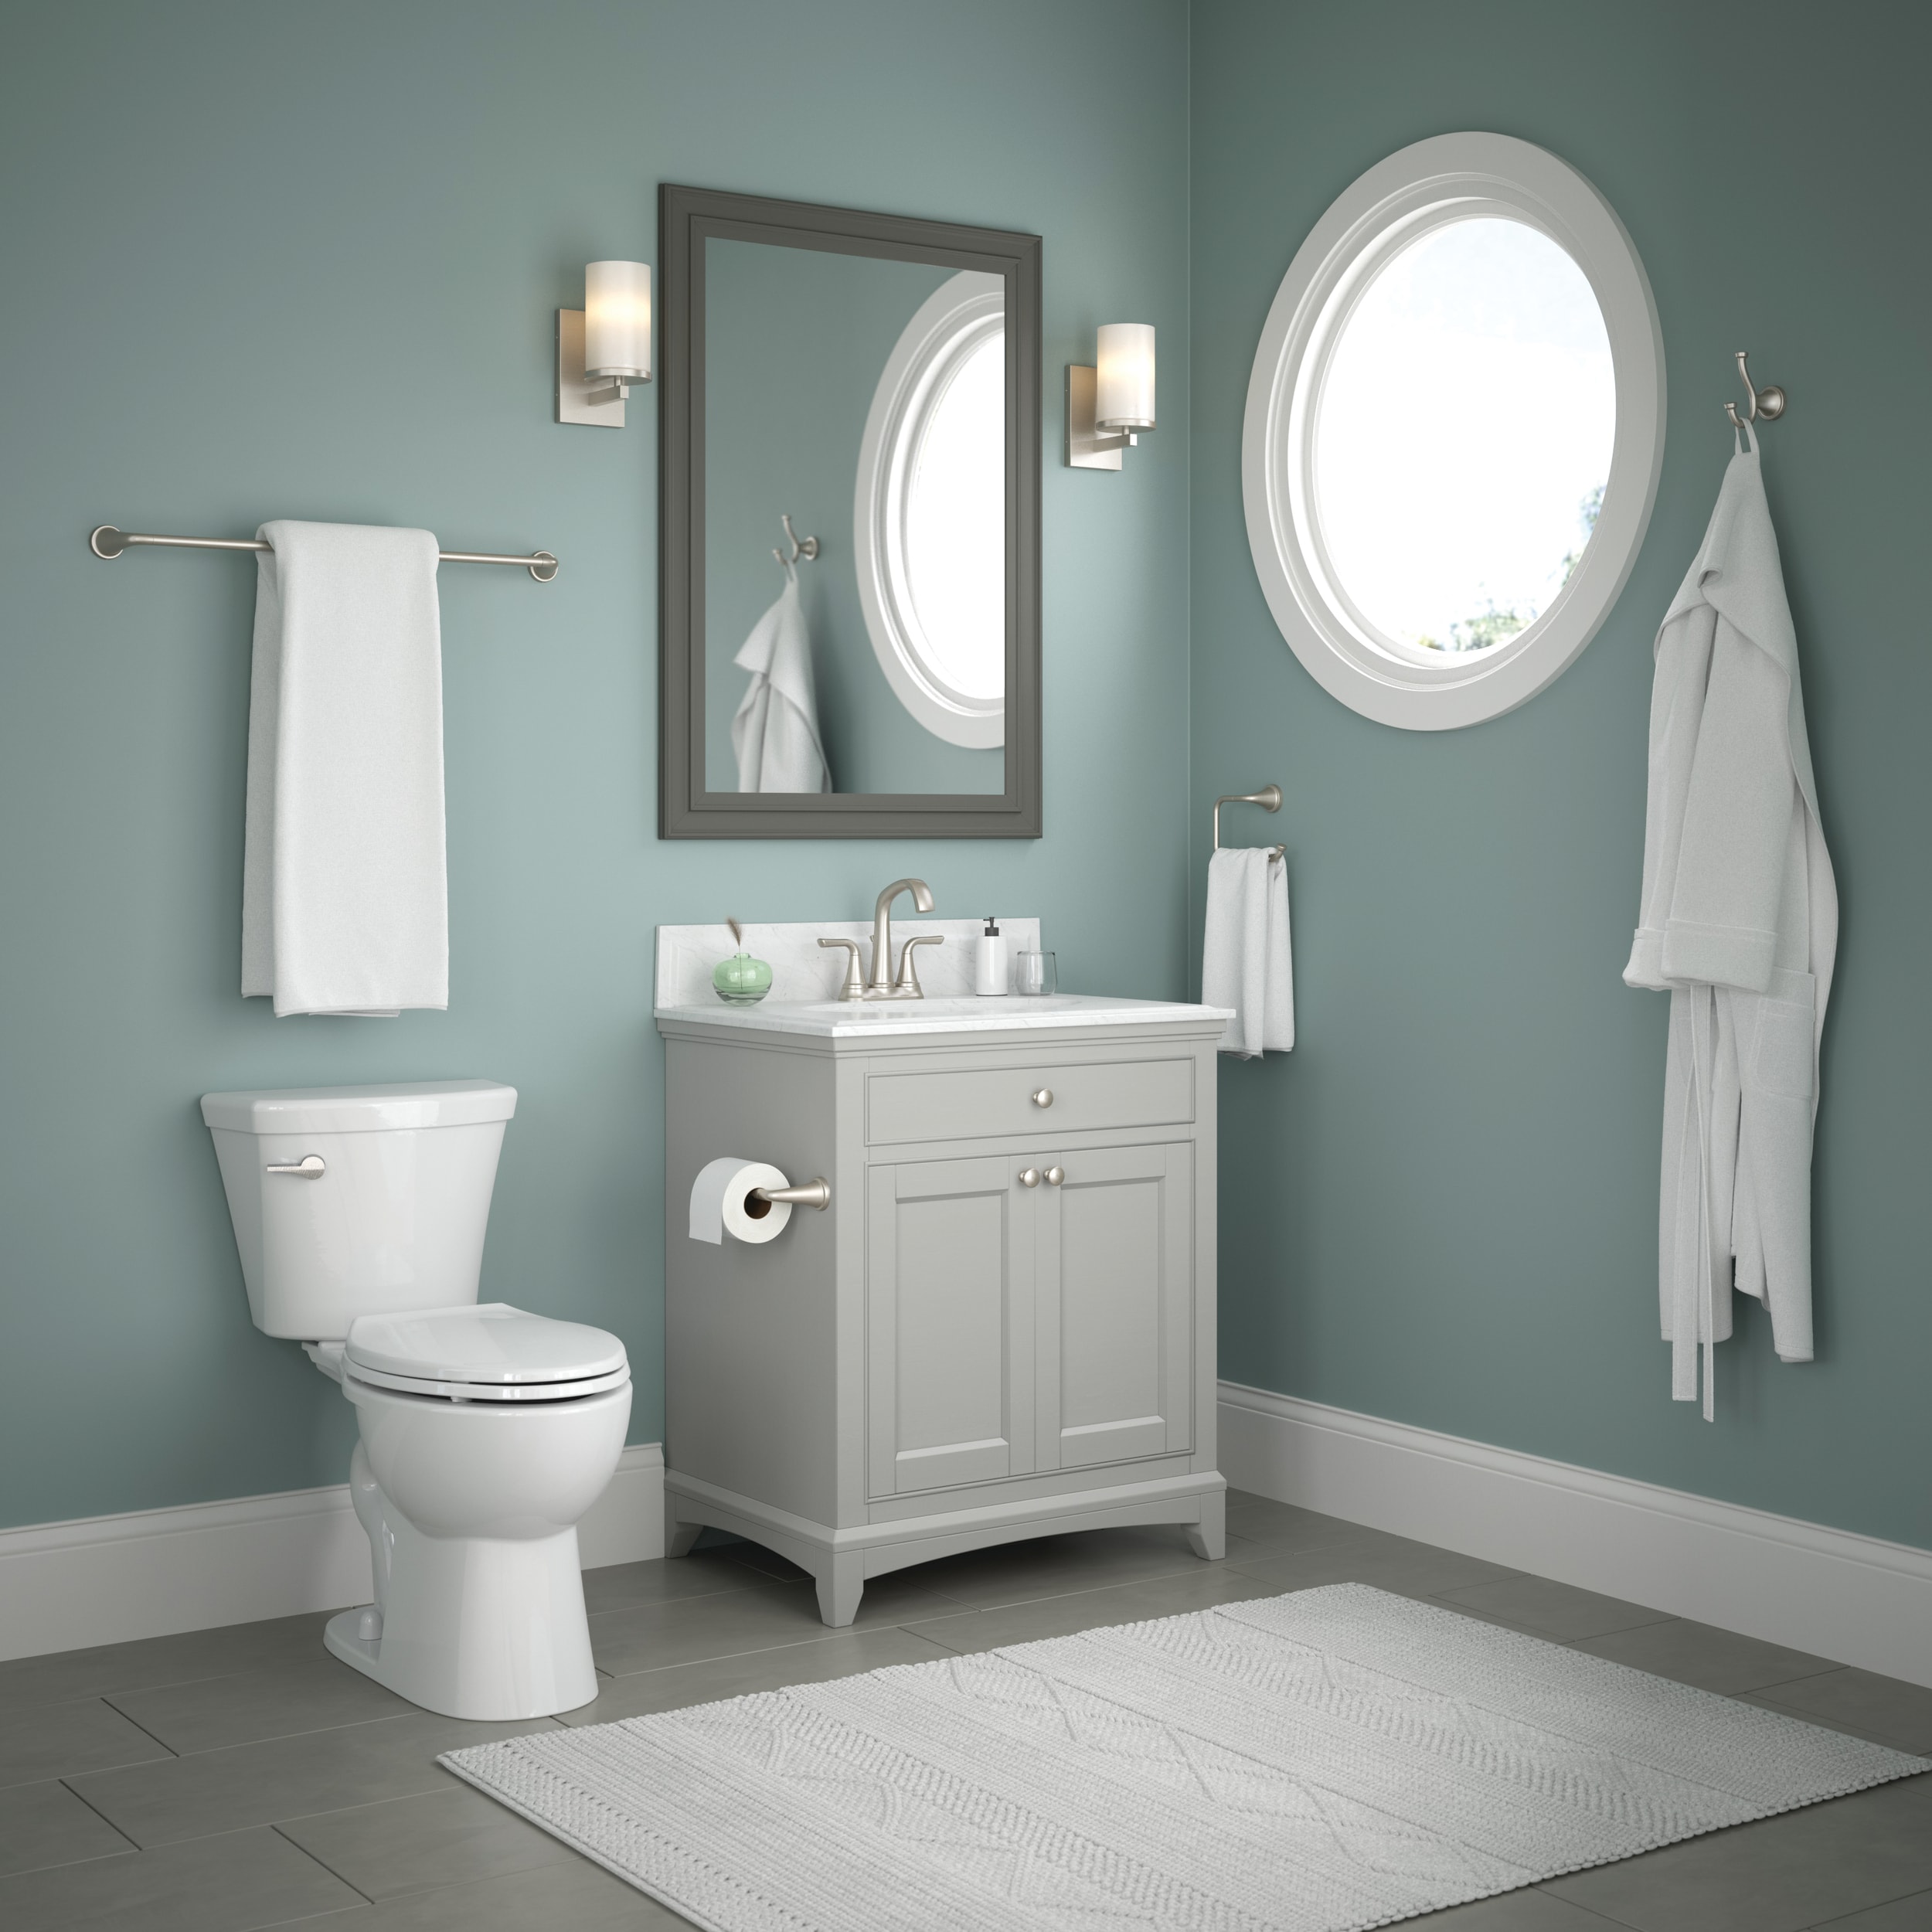 Polished Chrome 6 Piece Matching Bathroom Accessory Set - Luxury Bath  Collection